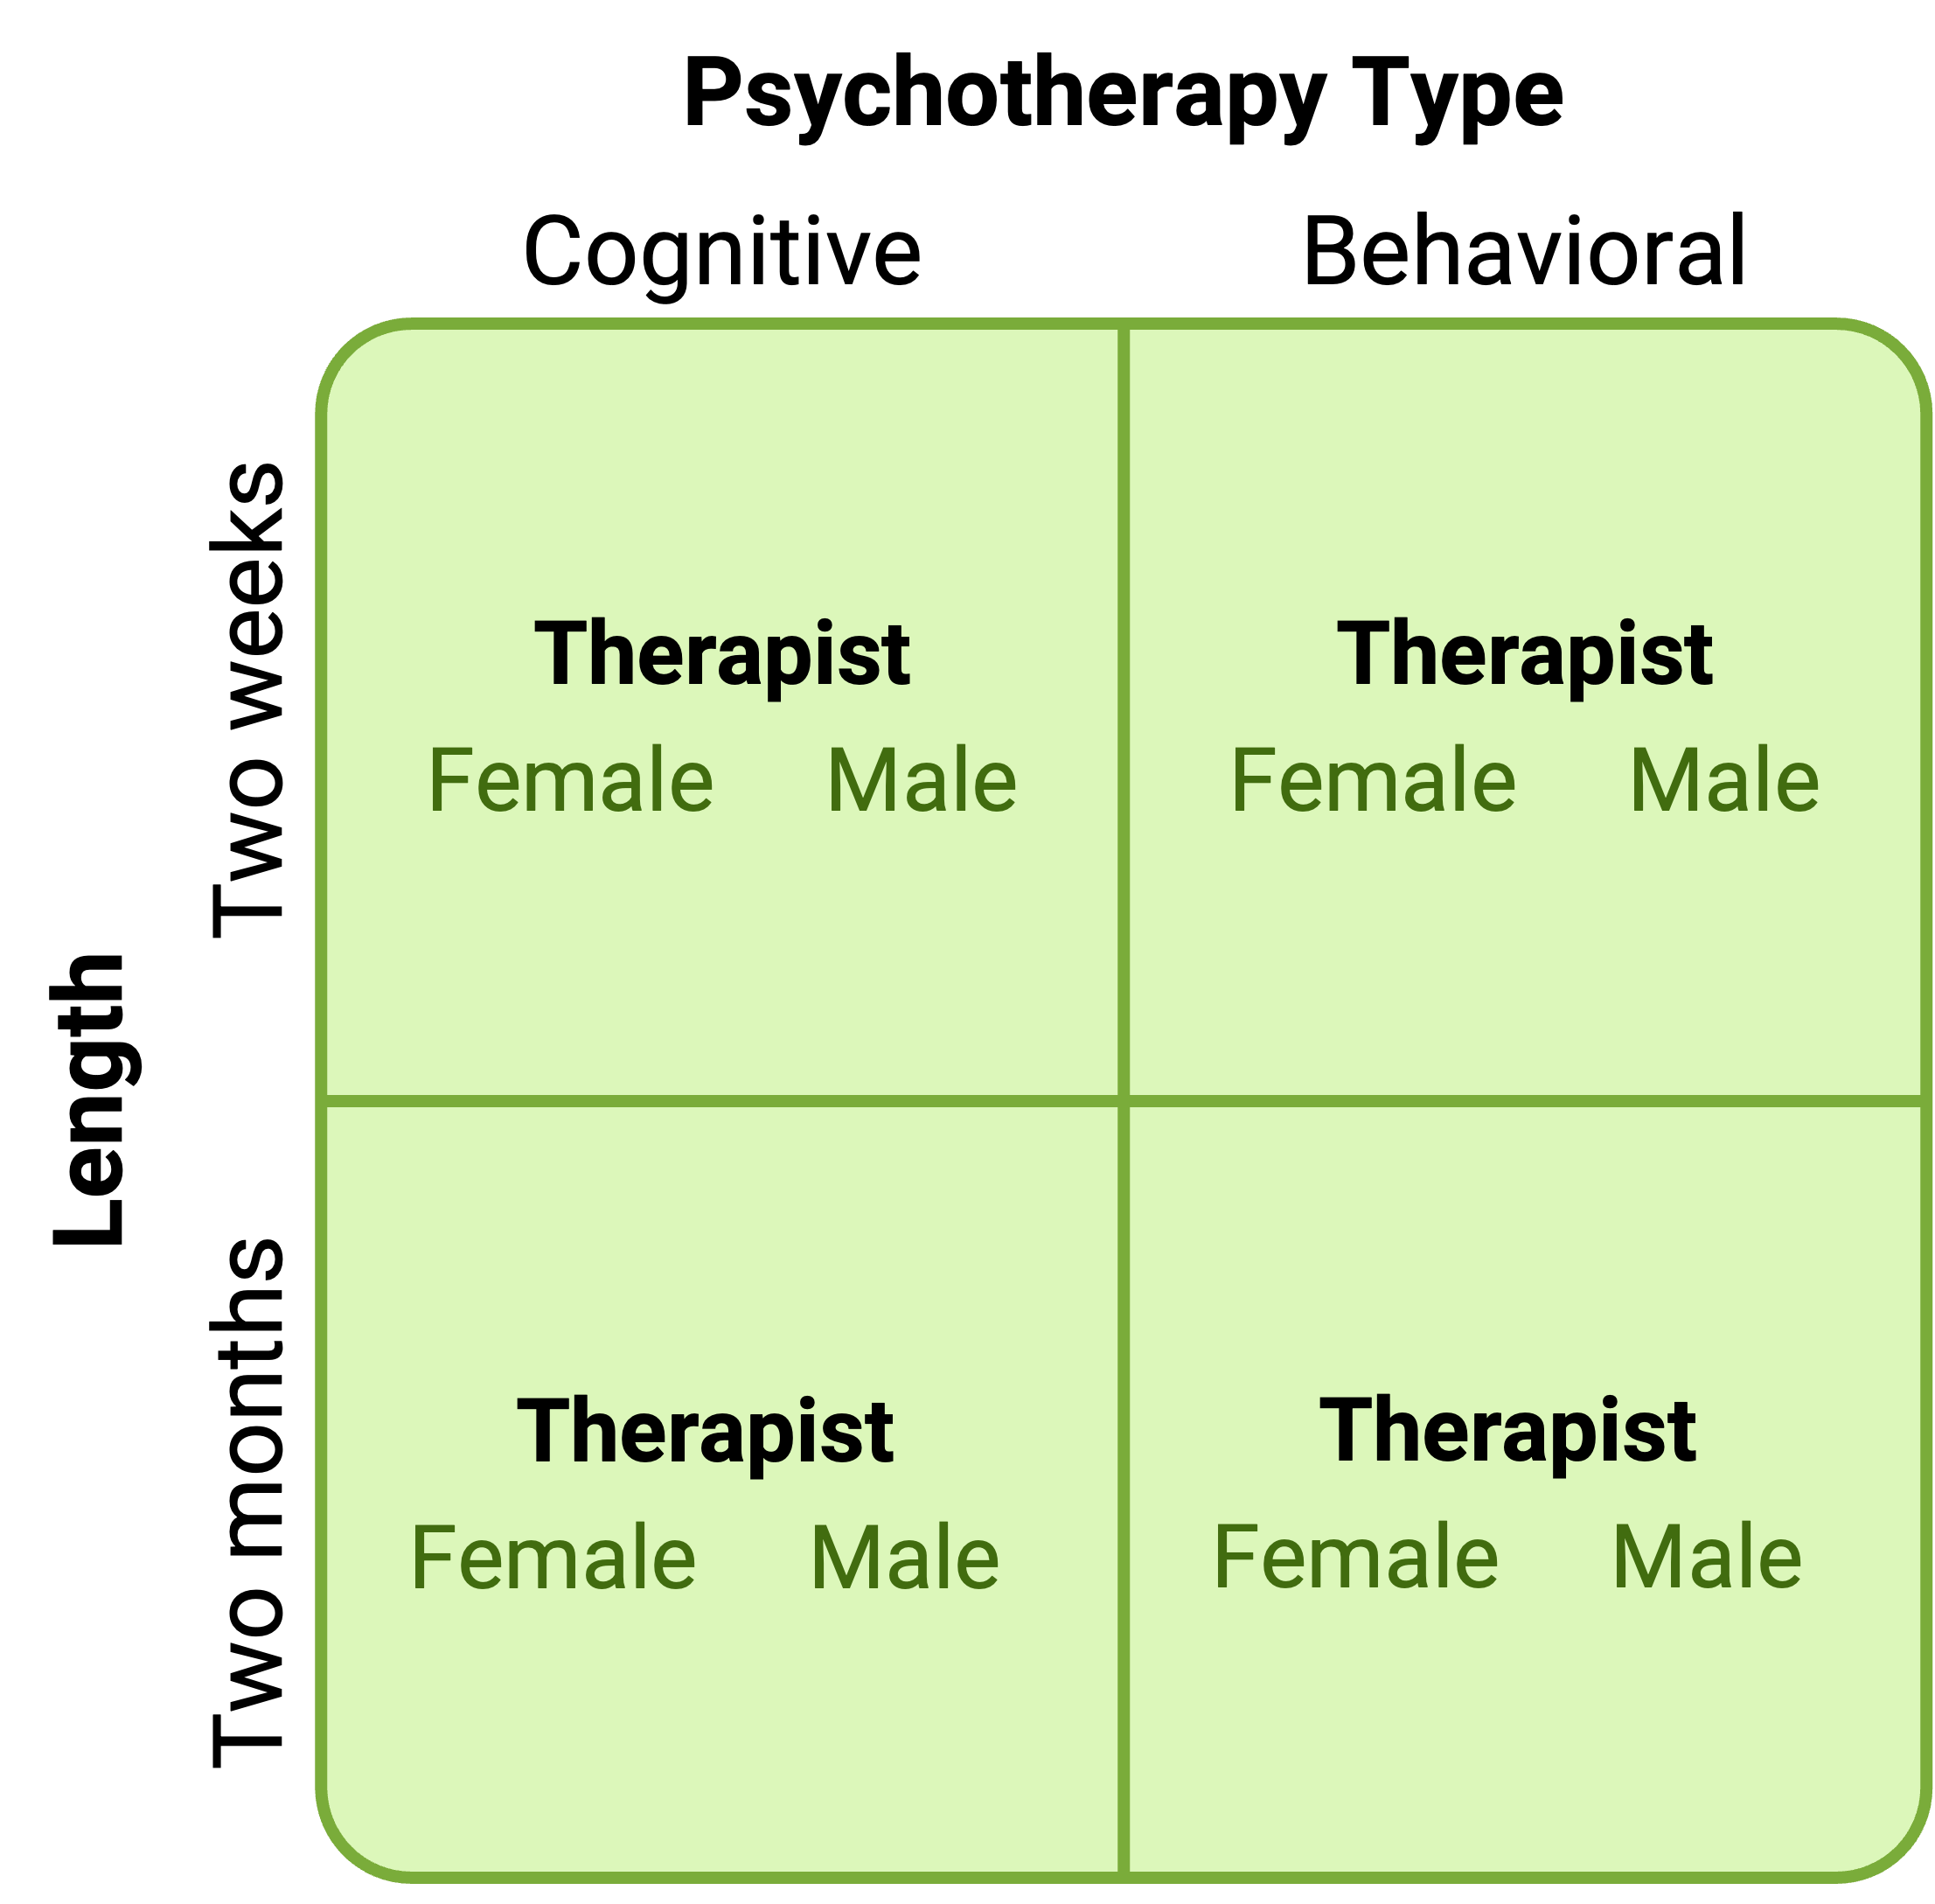 Factorial design table representing a 2 x 2 x 2 factorial design.